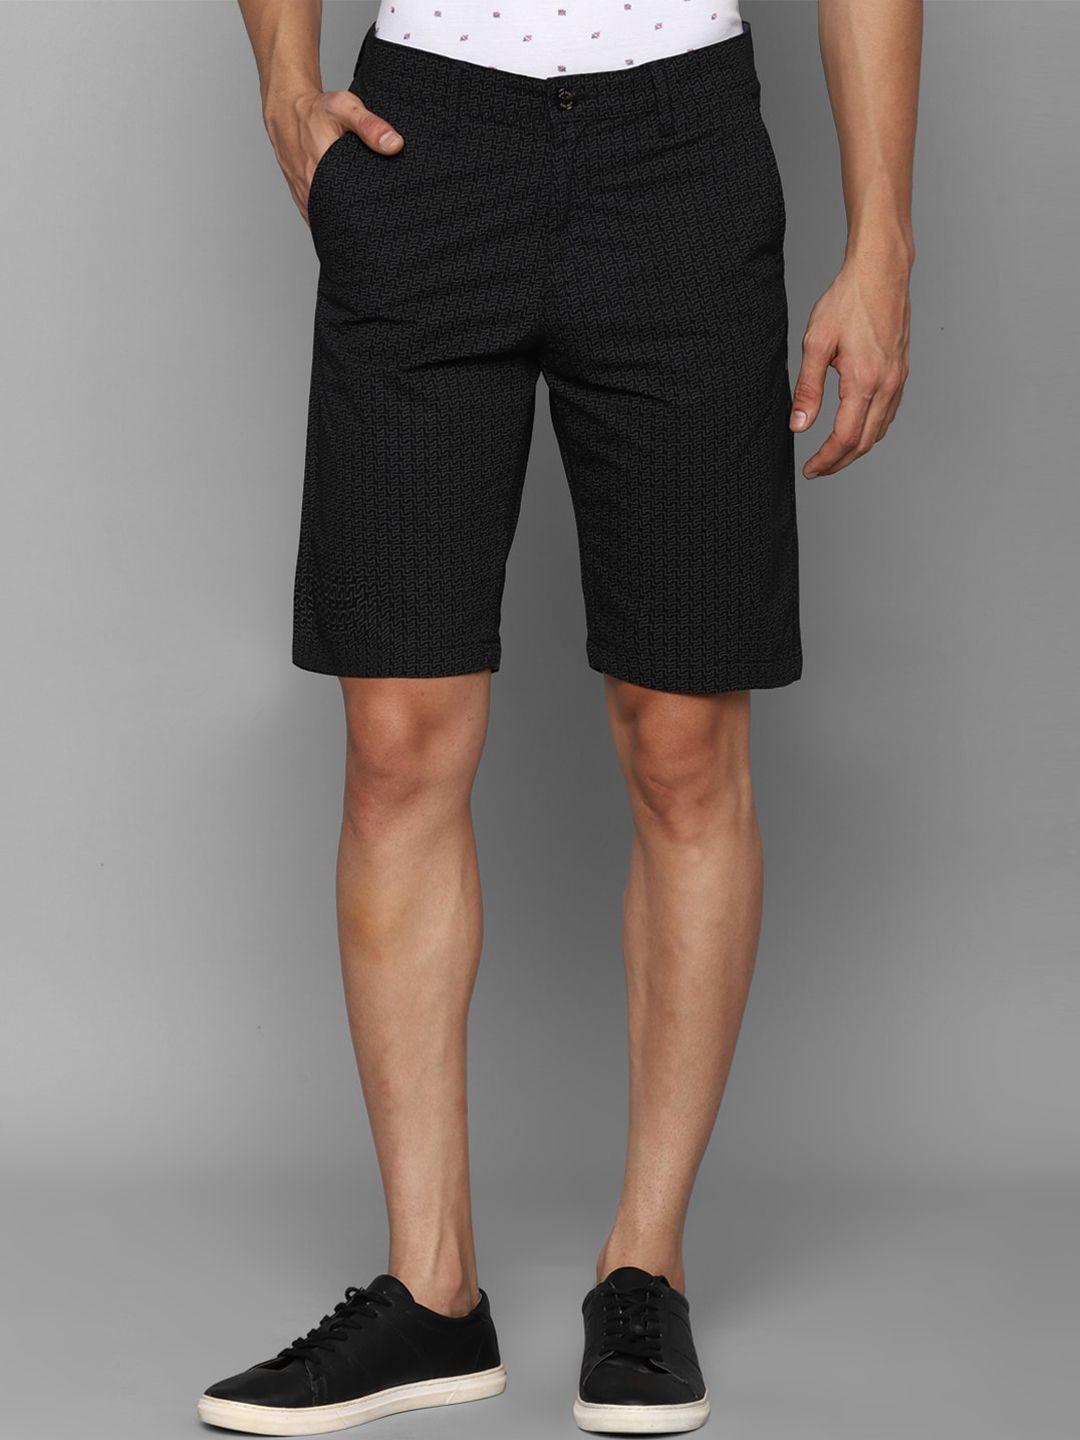 allen solly men black printed slim fit pure cotton shorts